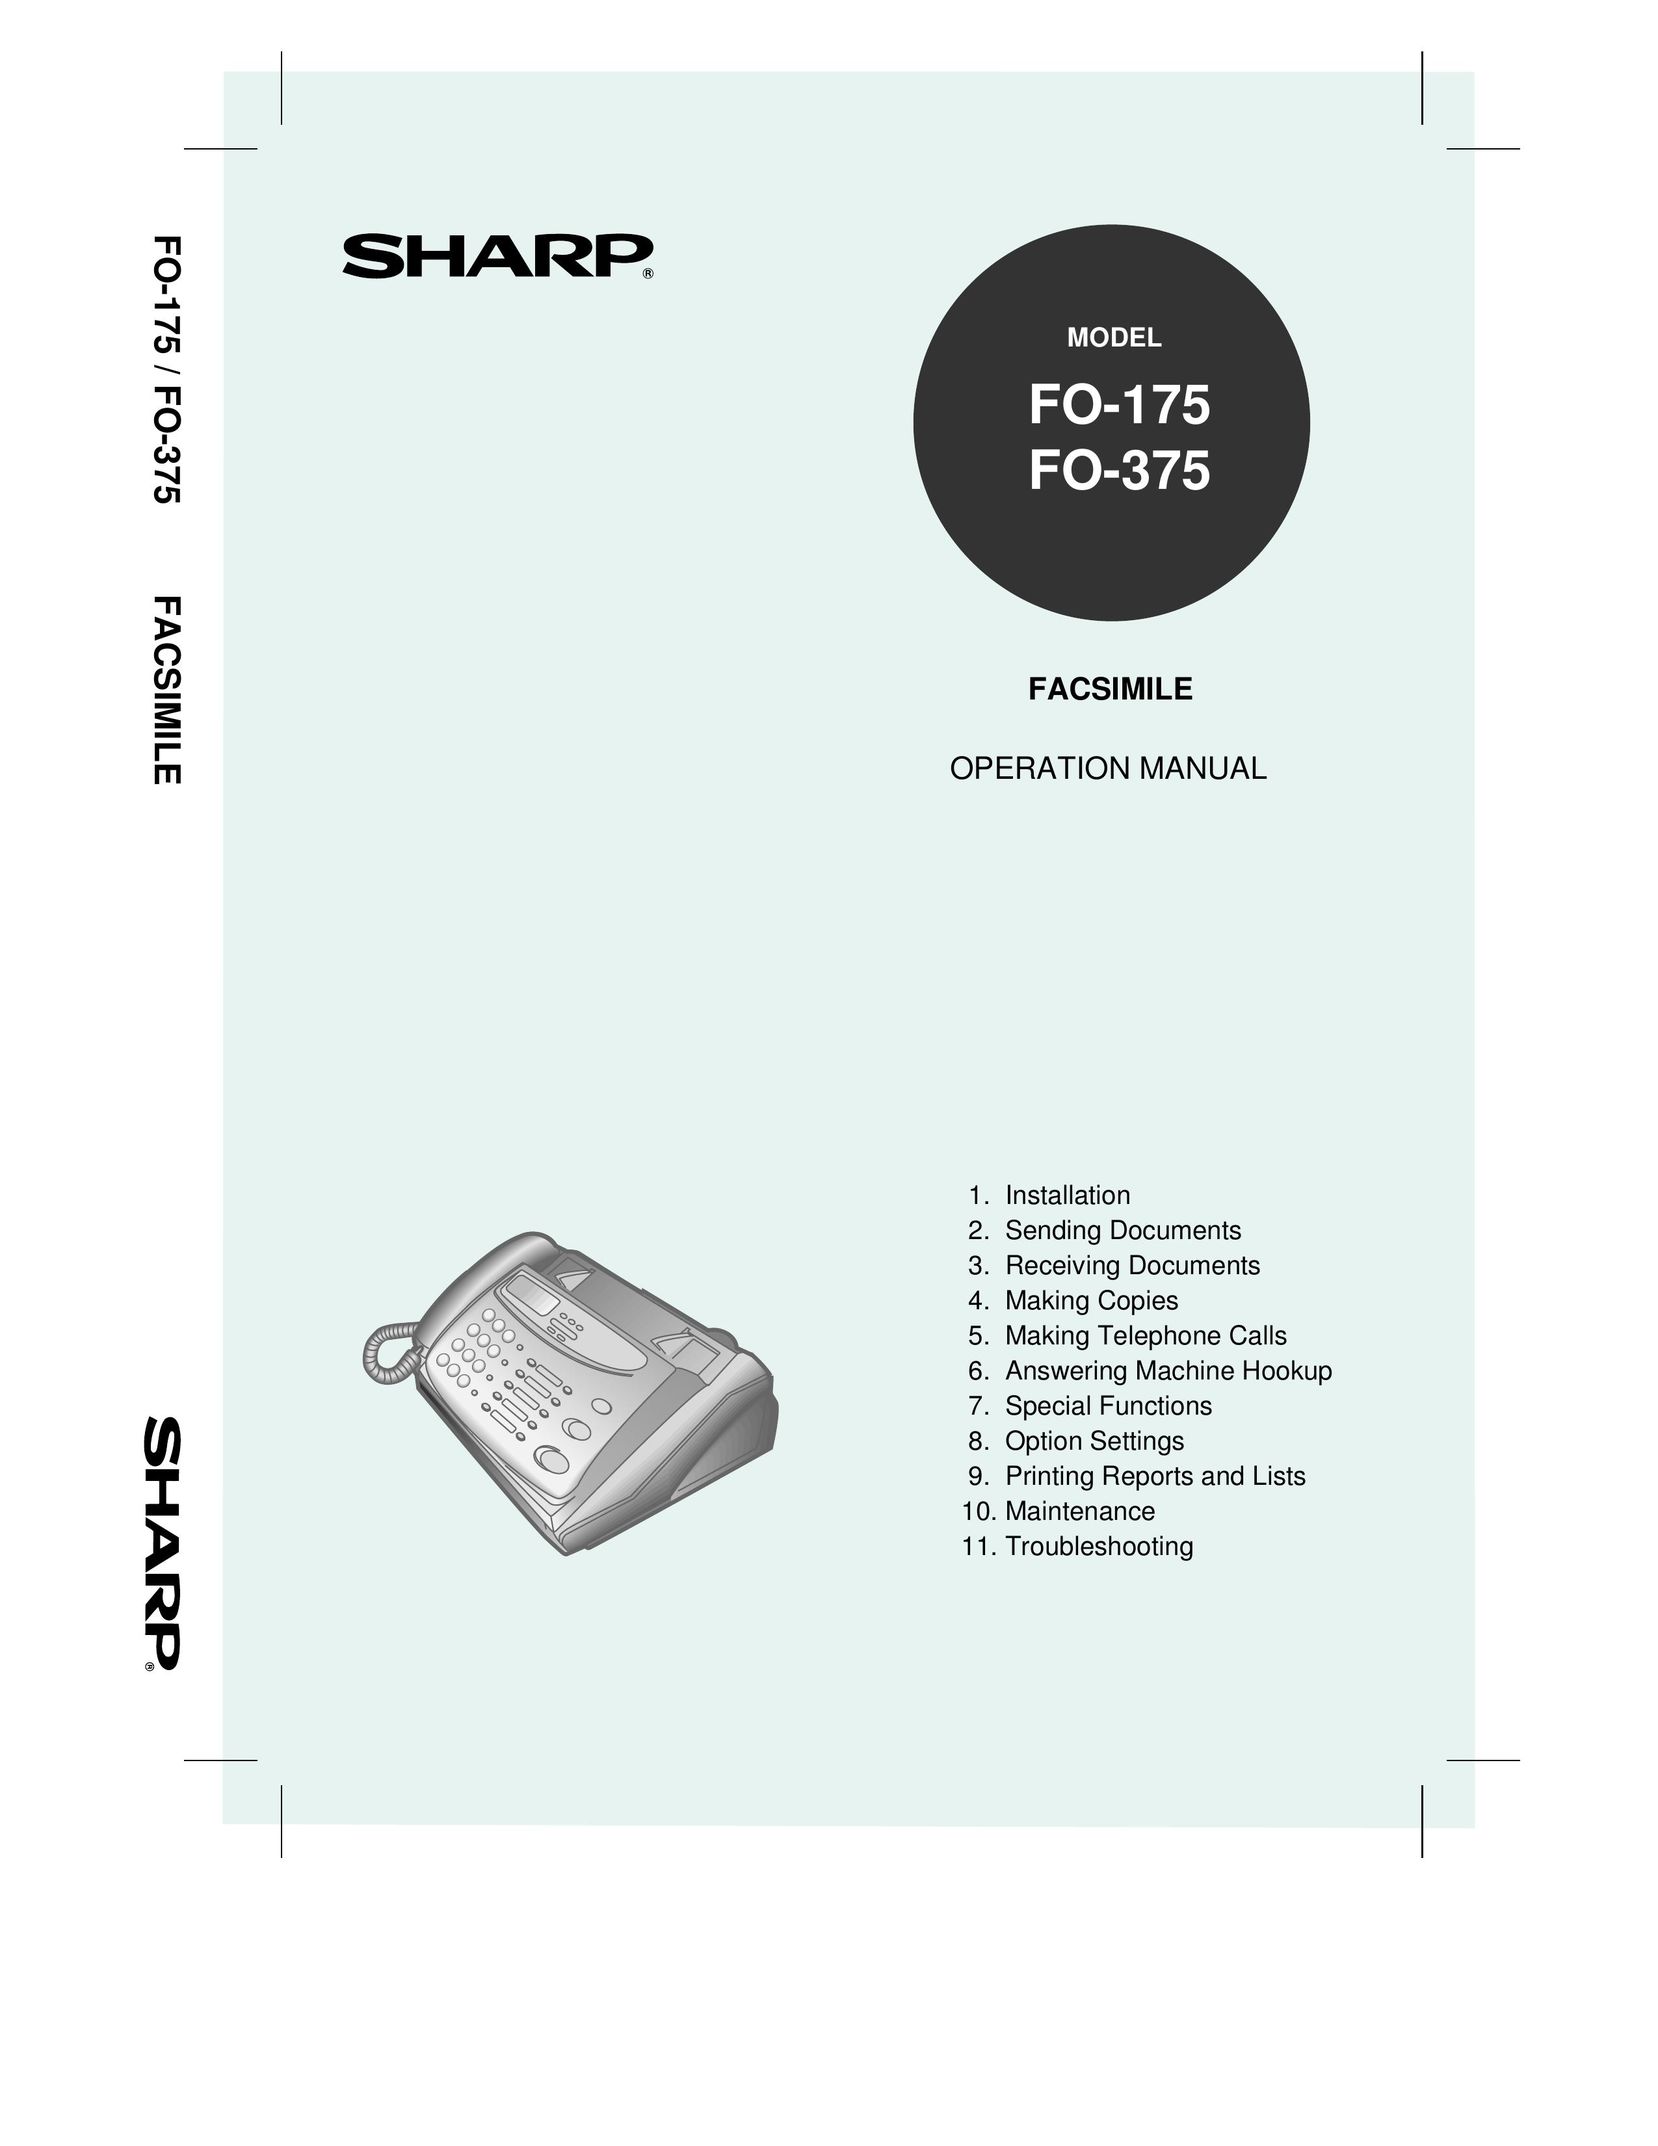 Sharp FO-175 Fax Machine User Manual